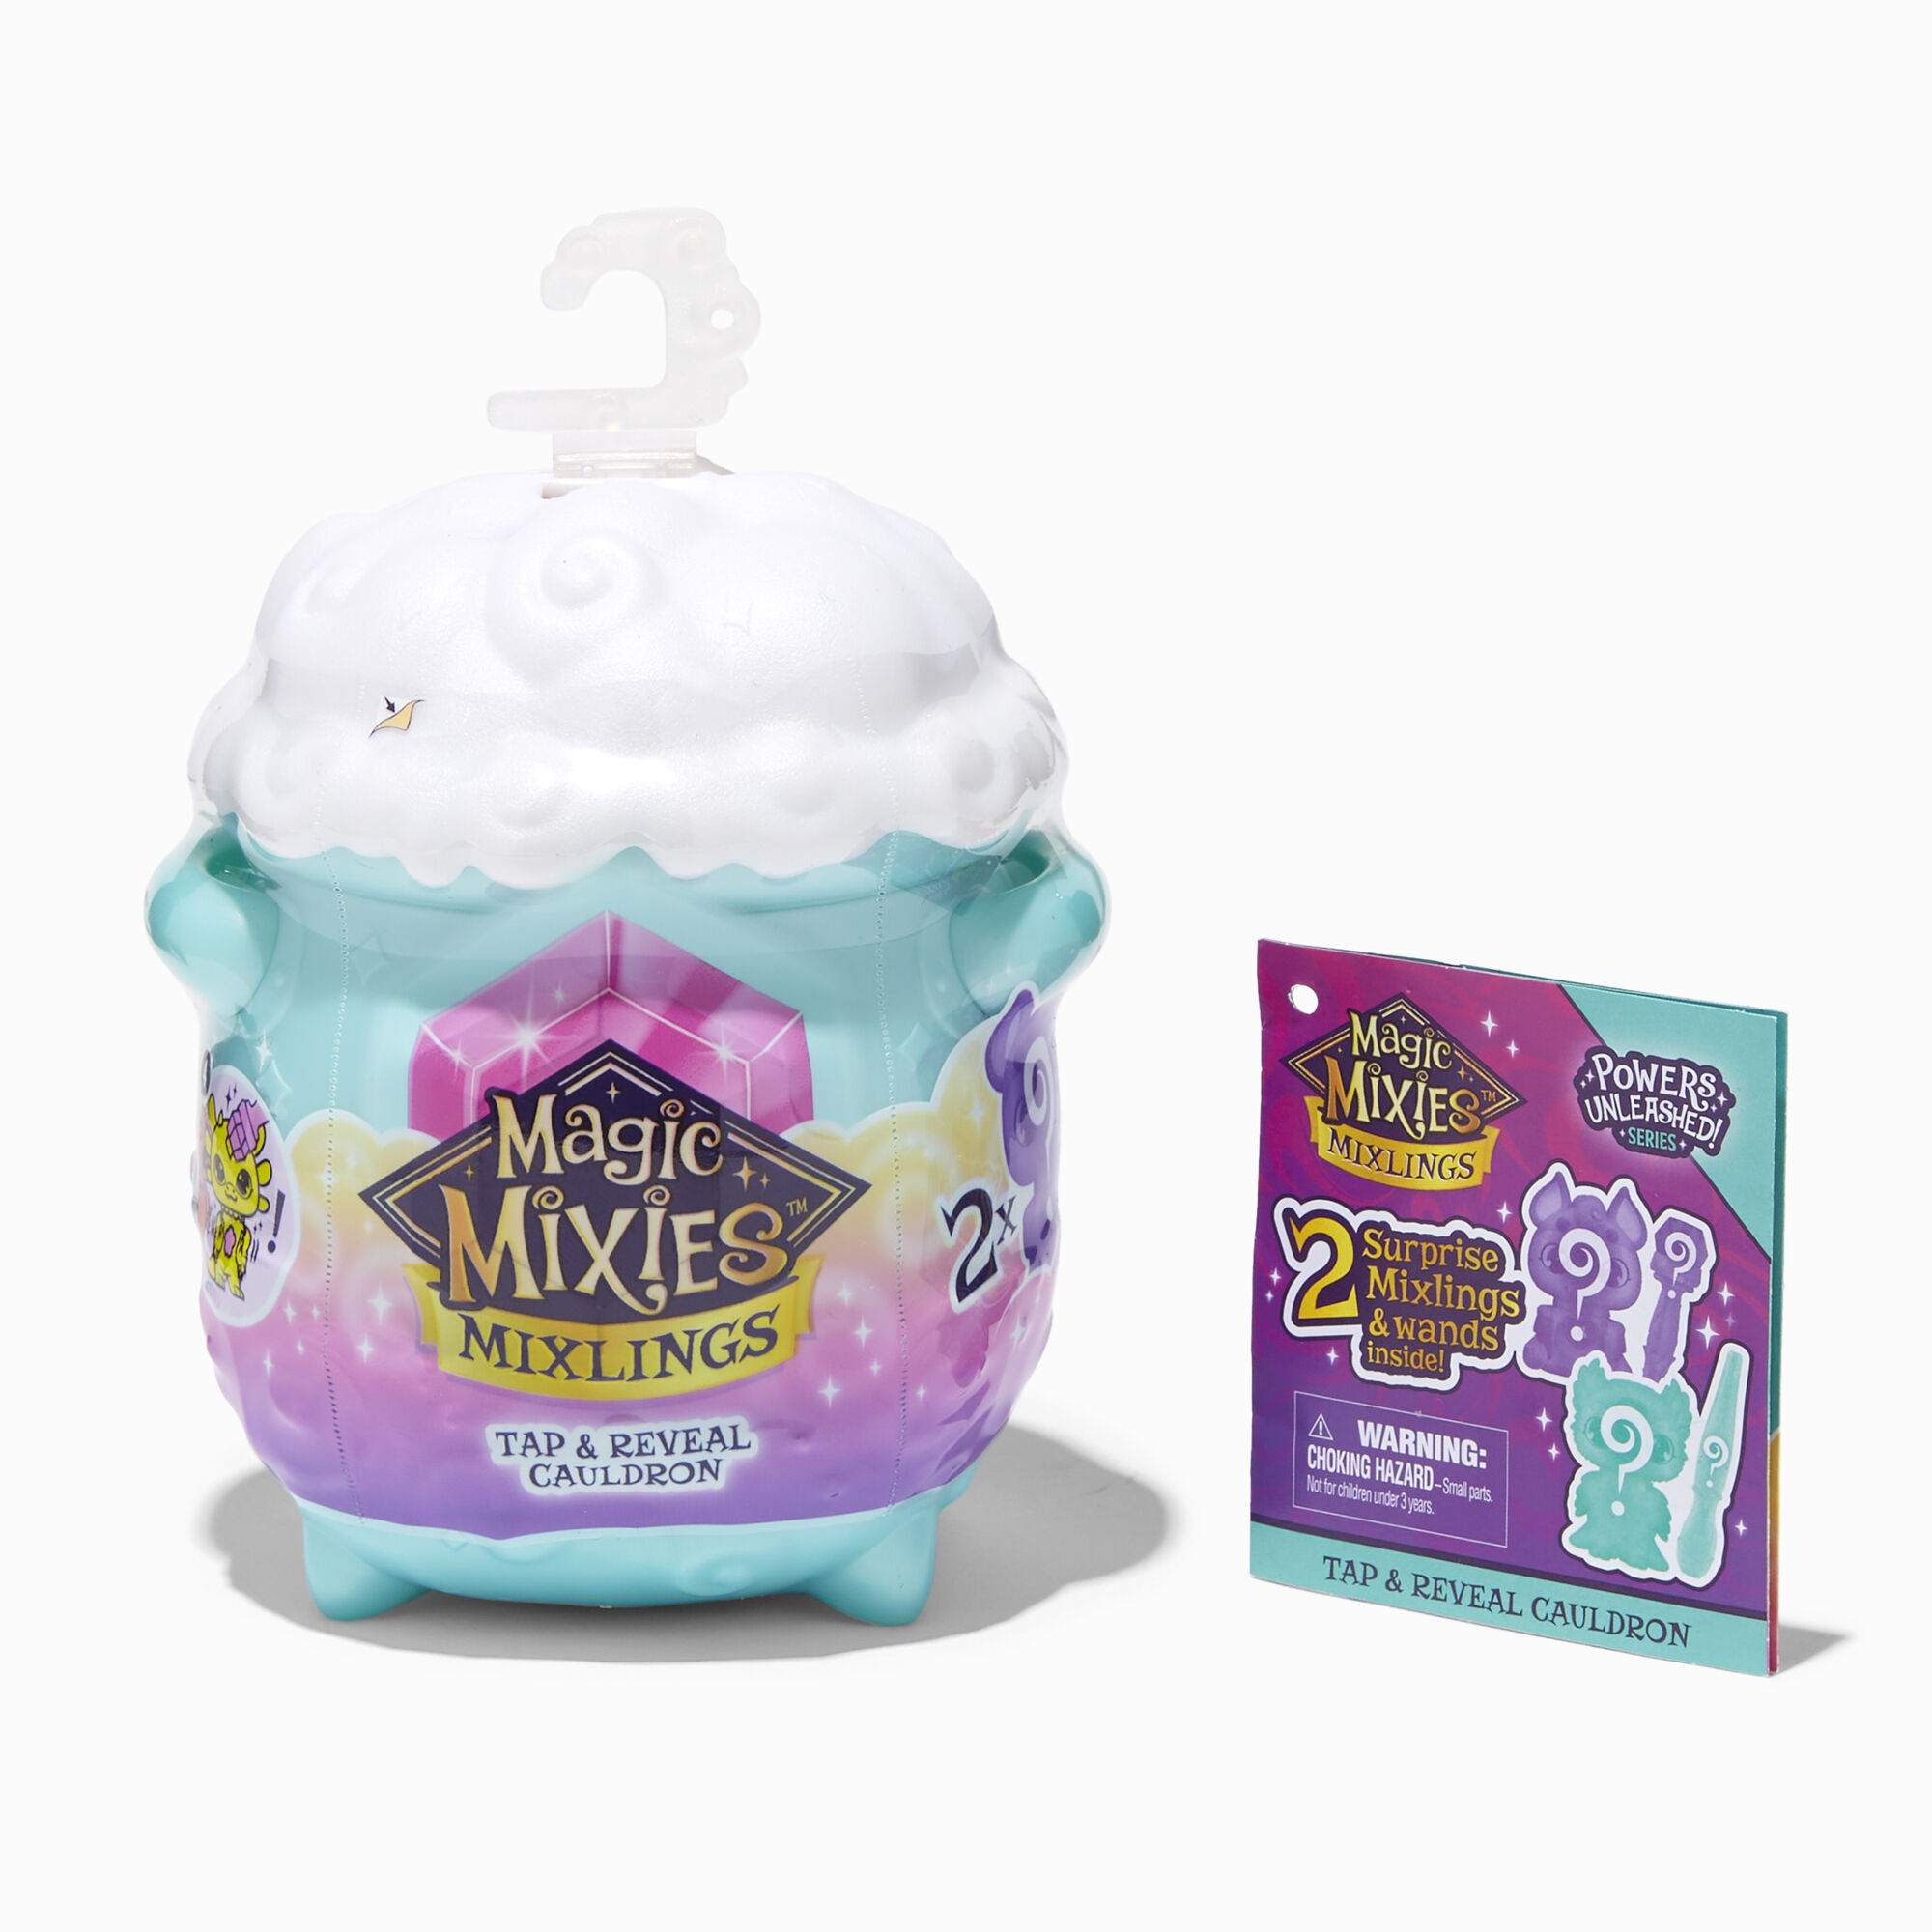 Magic Mixies™ Mixlings Cauldron Series 1 Blind Bag - 2 Pack